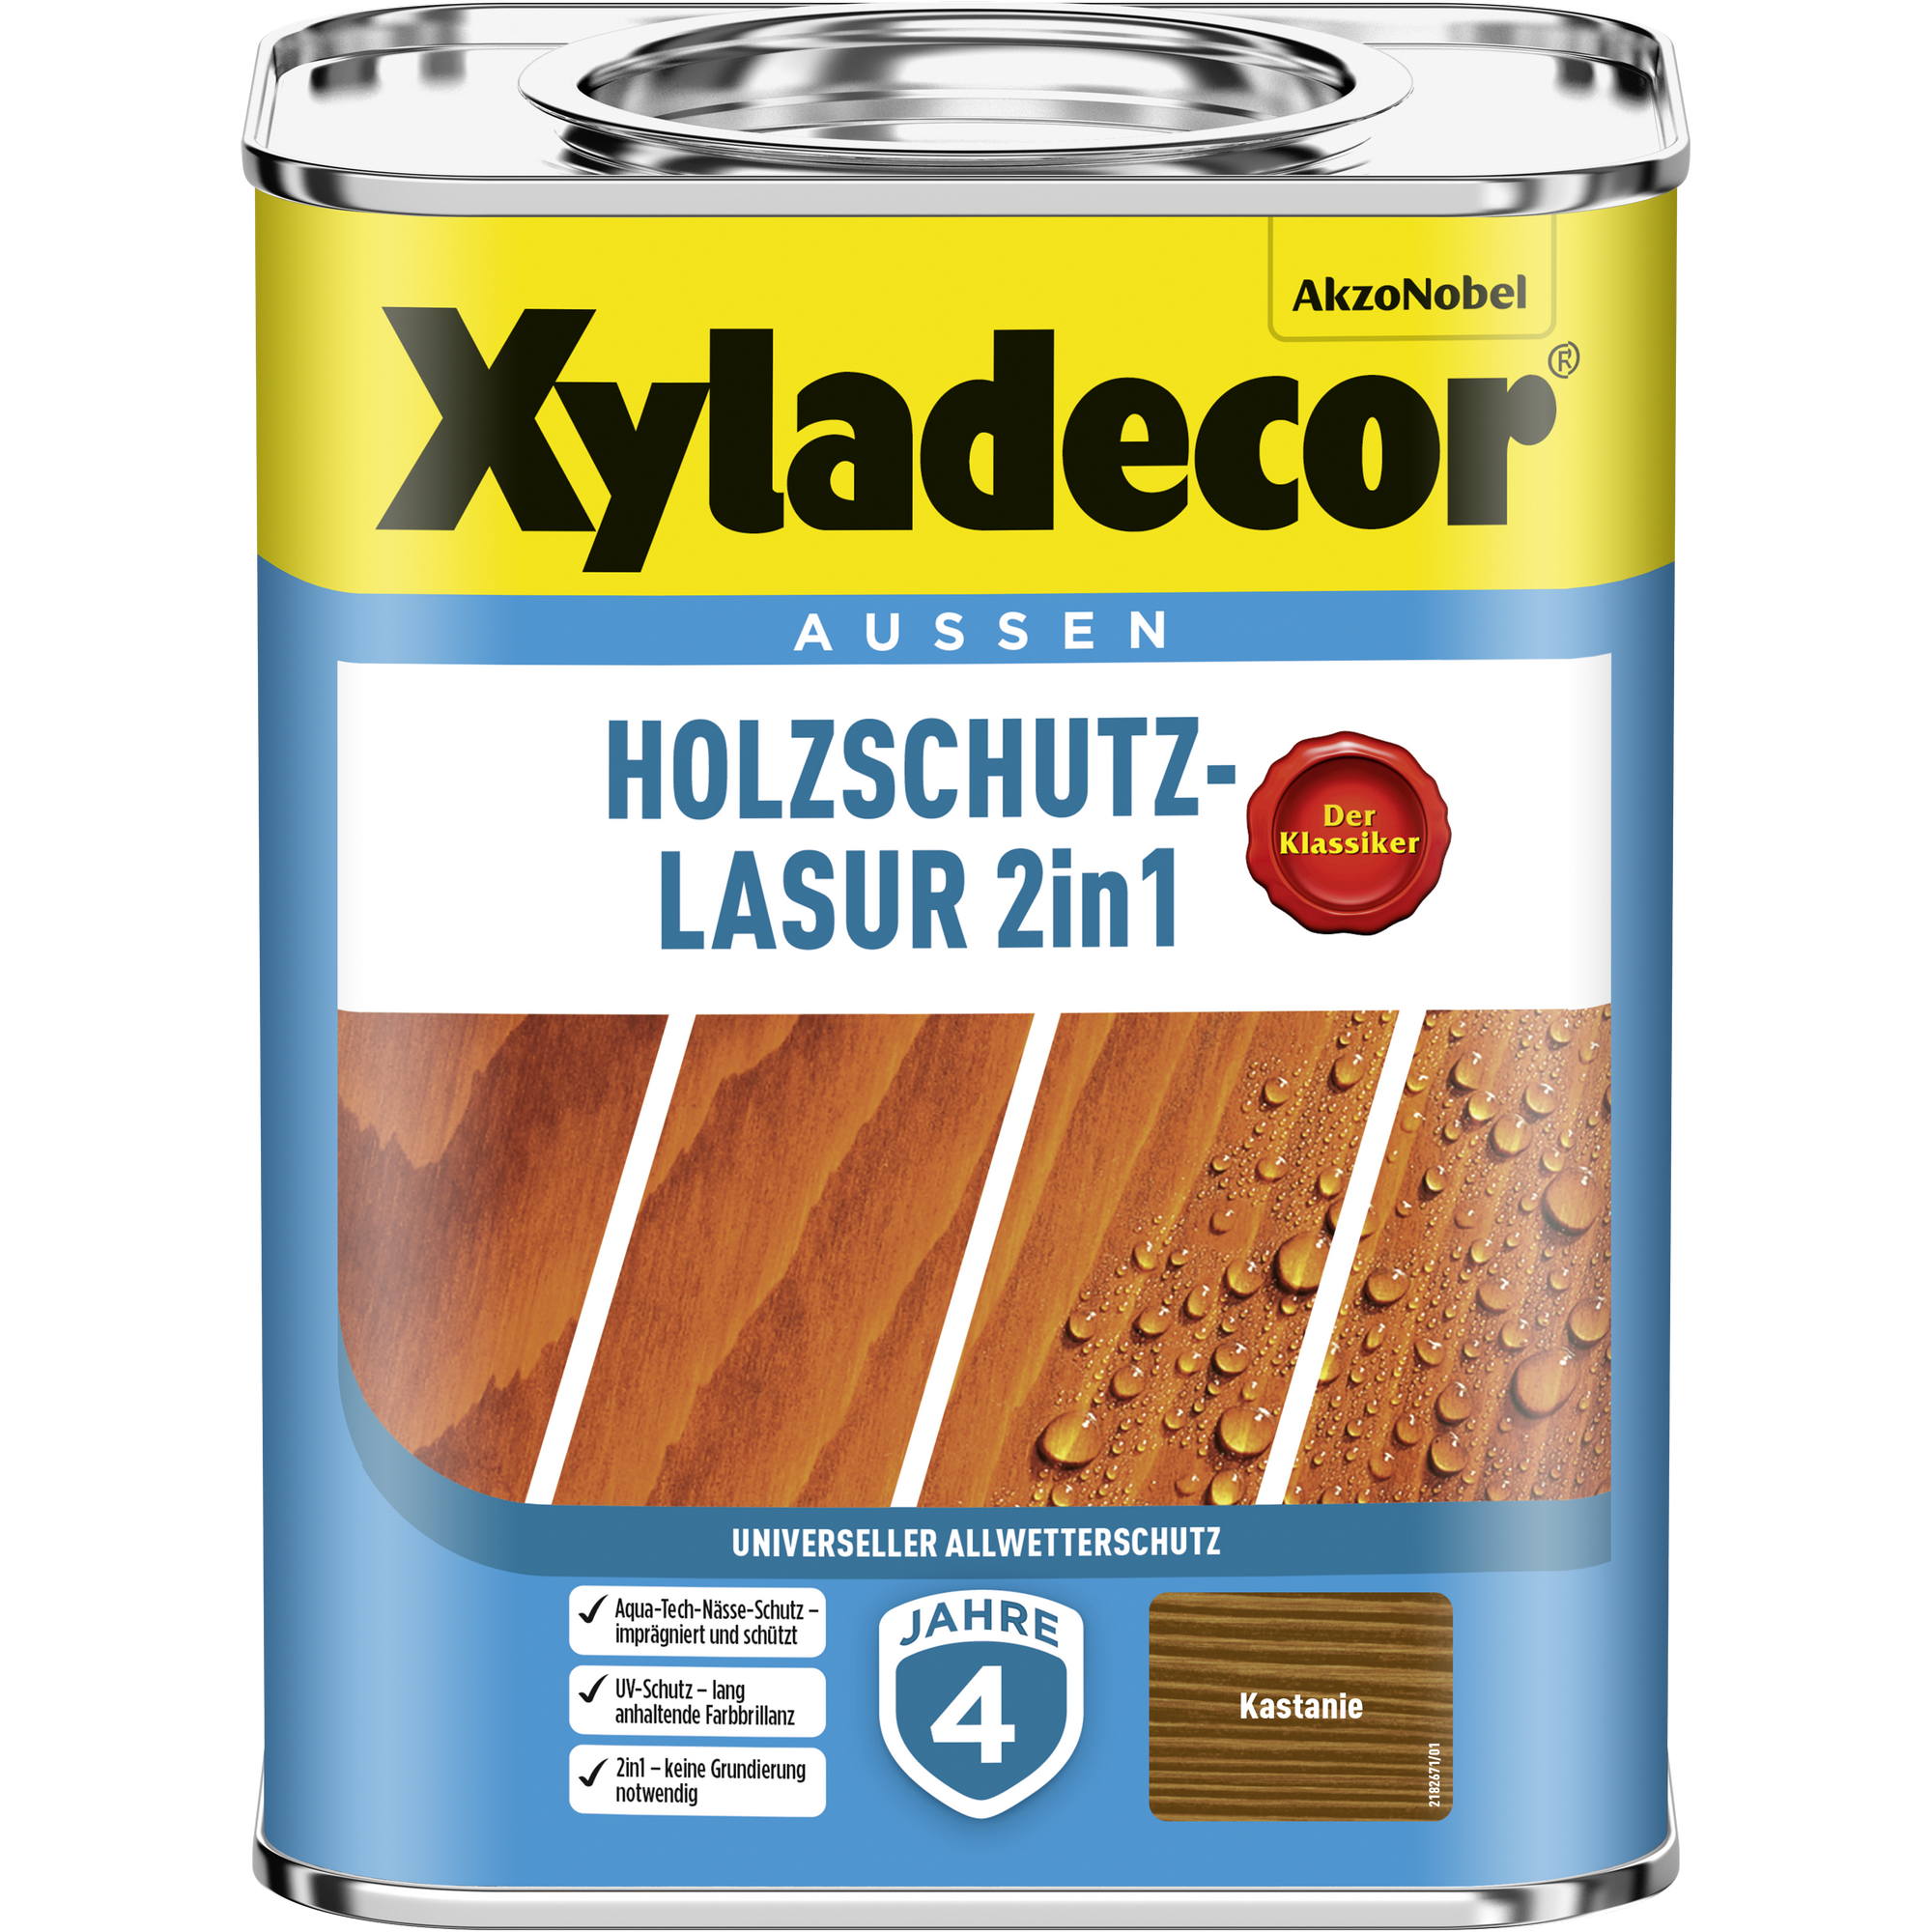 2in1 Holzschutzlasur kastanienfarben 750 ml + product picture